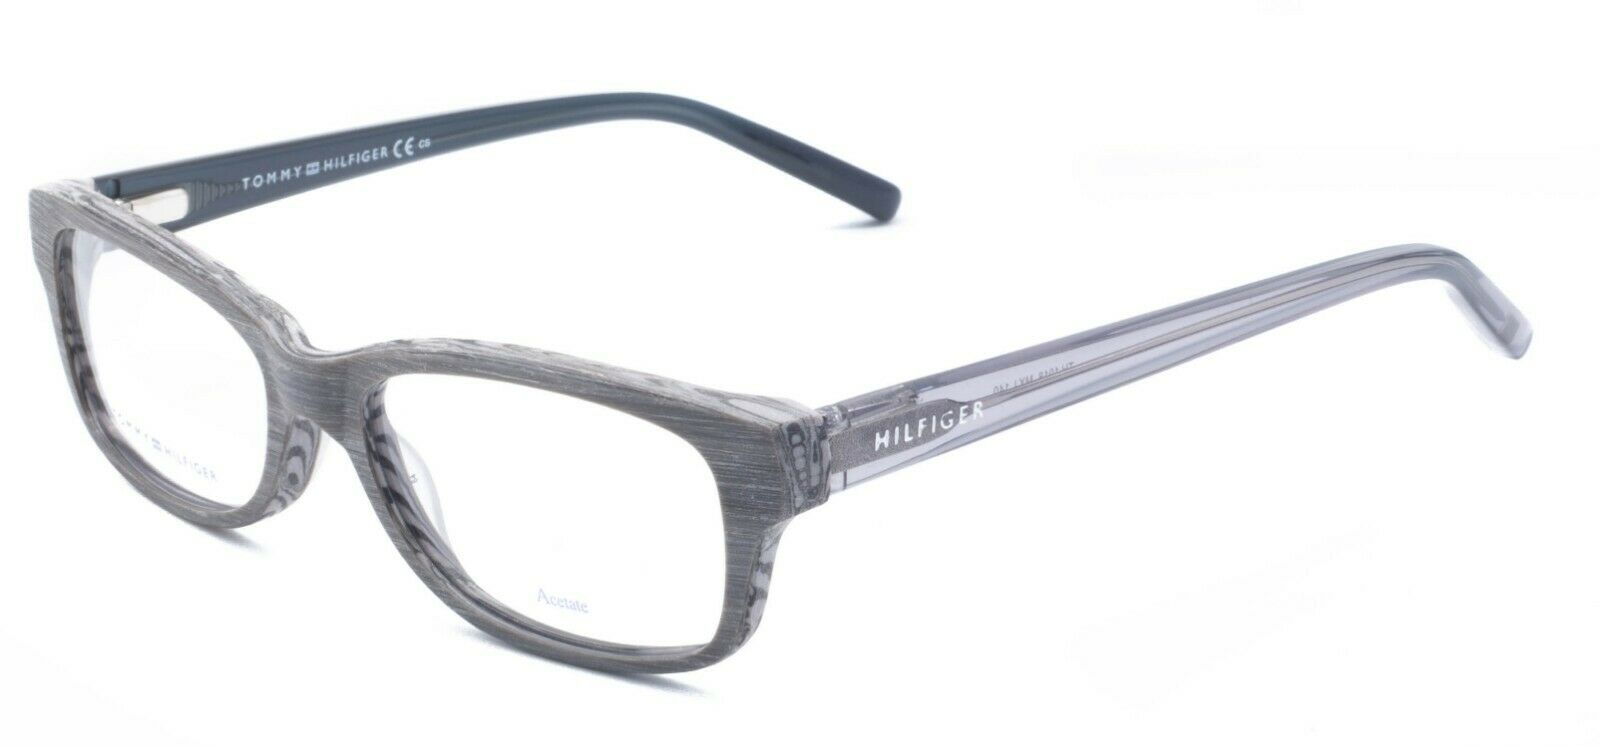 Fragiel Haalbaar tank TOMMY HILFIGER TH 1018 MXJ 52mm Eyewear FRAMES Glasses RX Optical  Eyeglasses New - GGV Eyewear